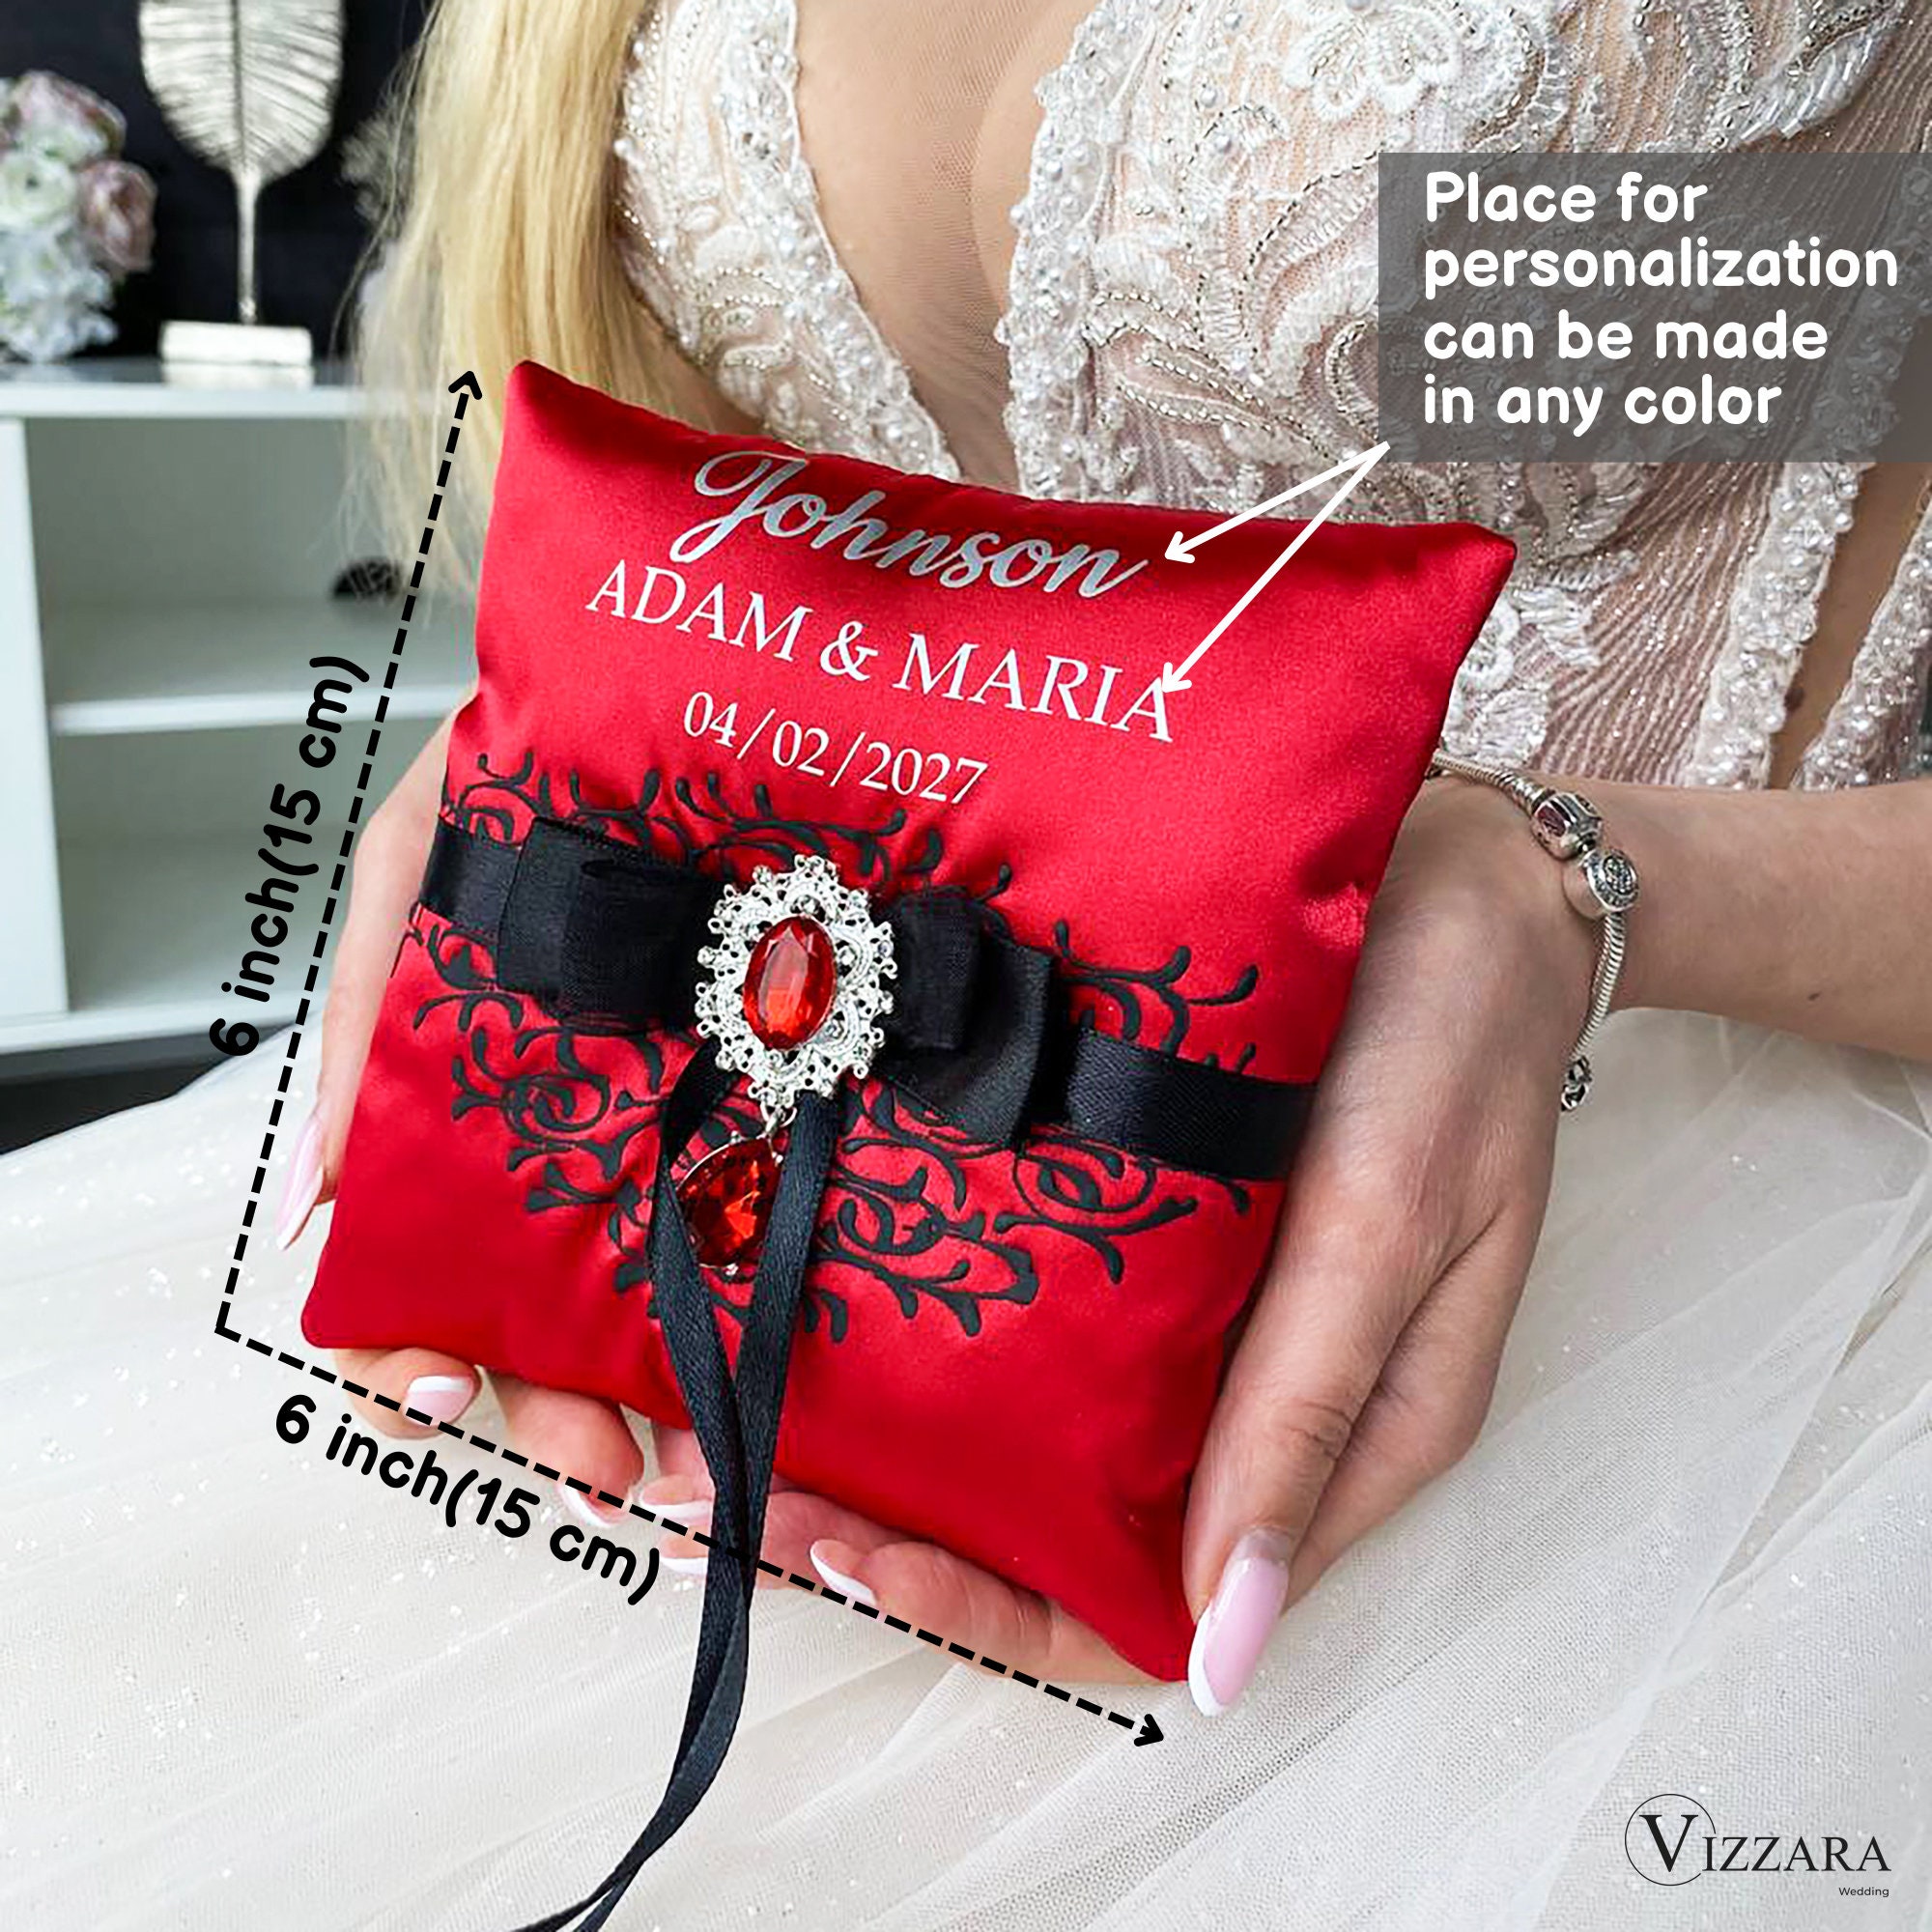 Wedding Ring Pillow 15cm - Rustic Jute Flower Pillows for Wedding Ceremony  | eBay